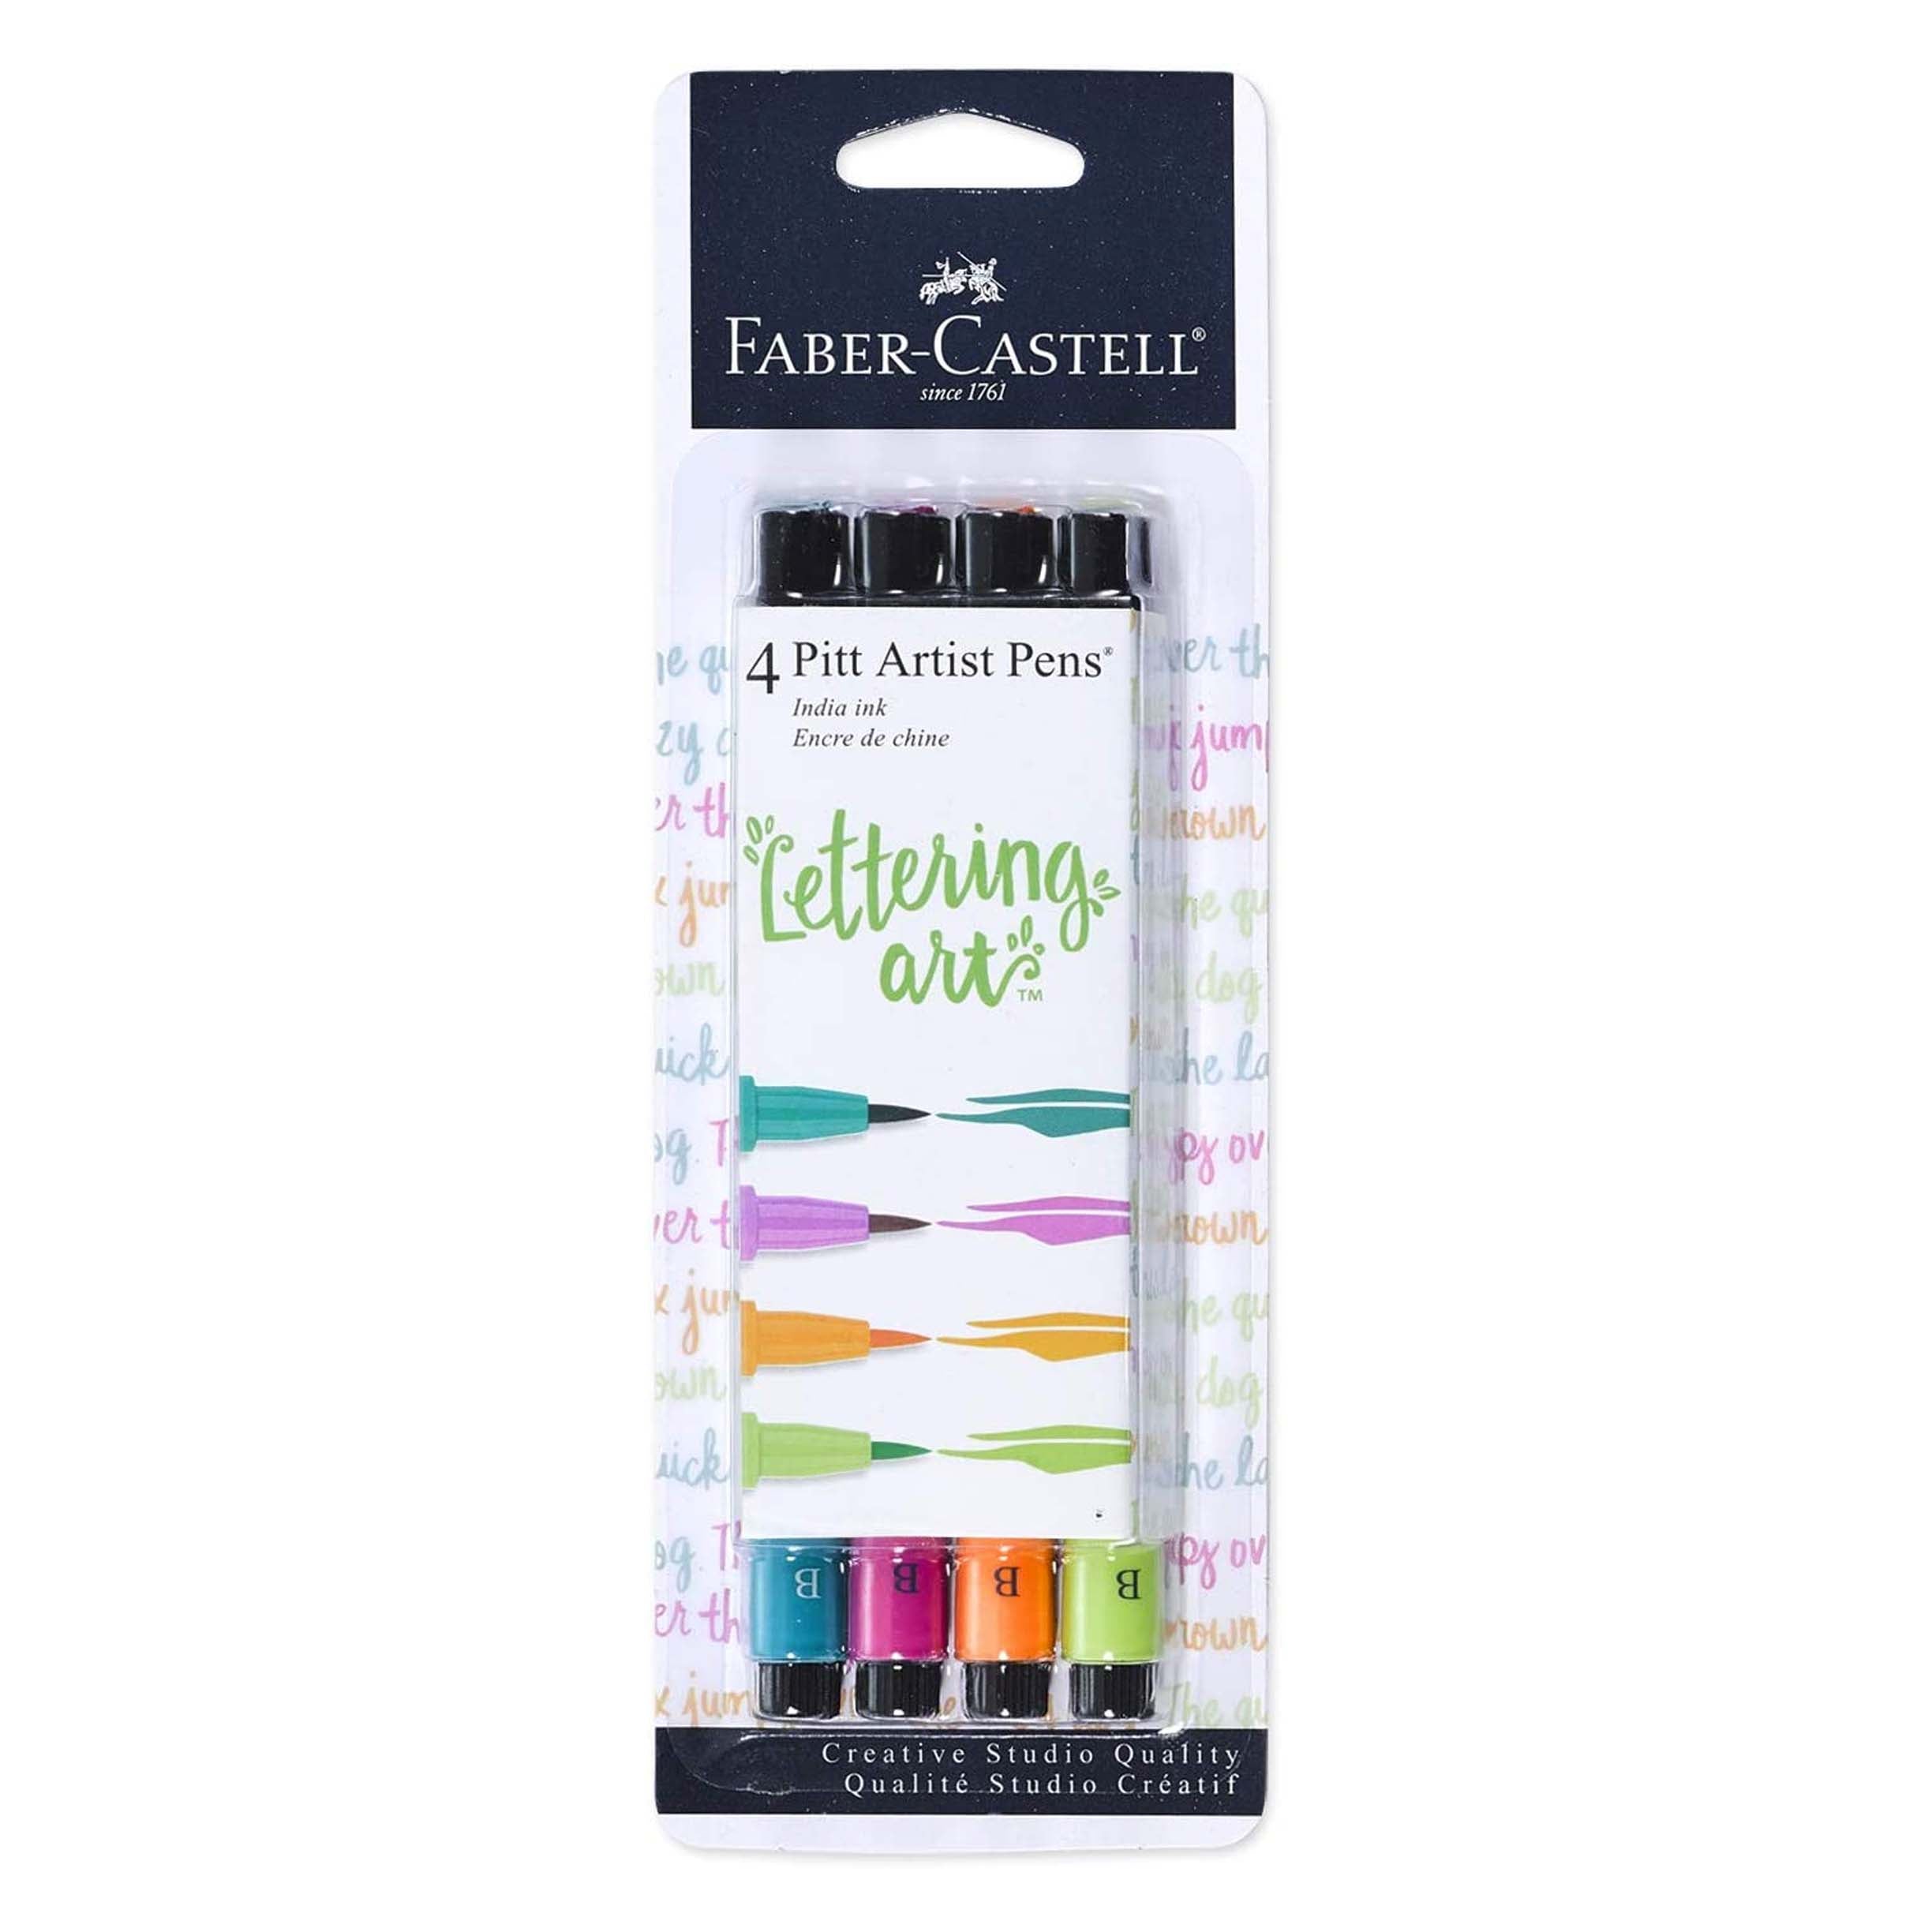 Faber-Castell Pitt Artist Pens, Lettering Art Set of 4 - Brights